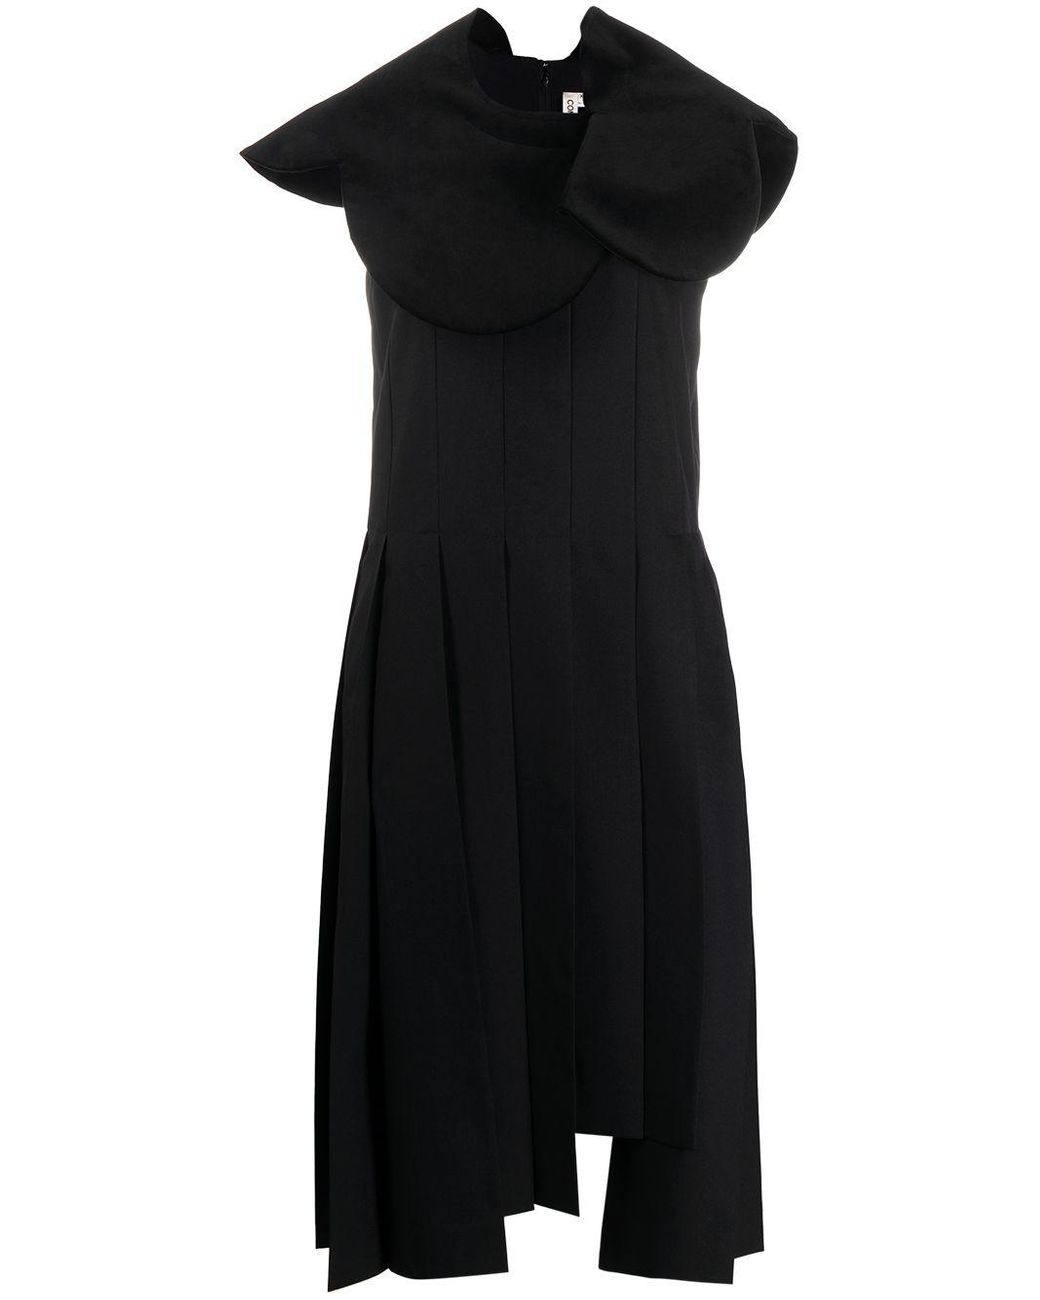 Comme des Garçons Asymmetric Pleated Dress in Black - Lyst